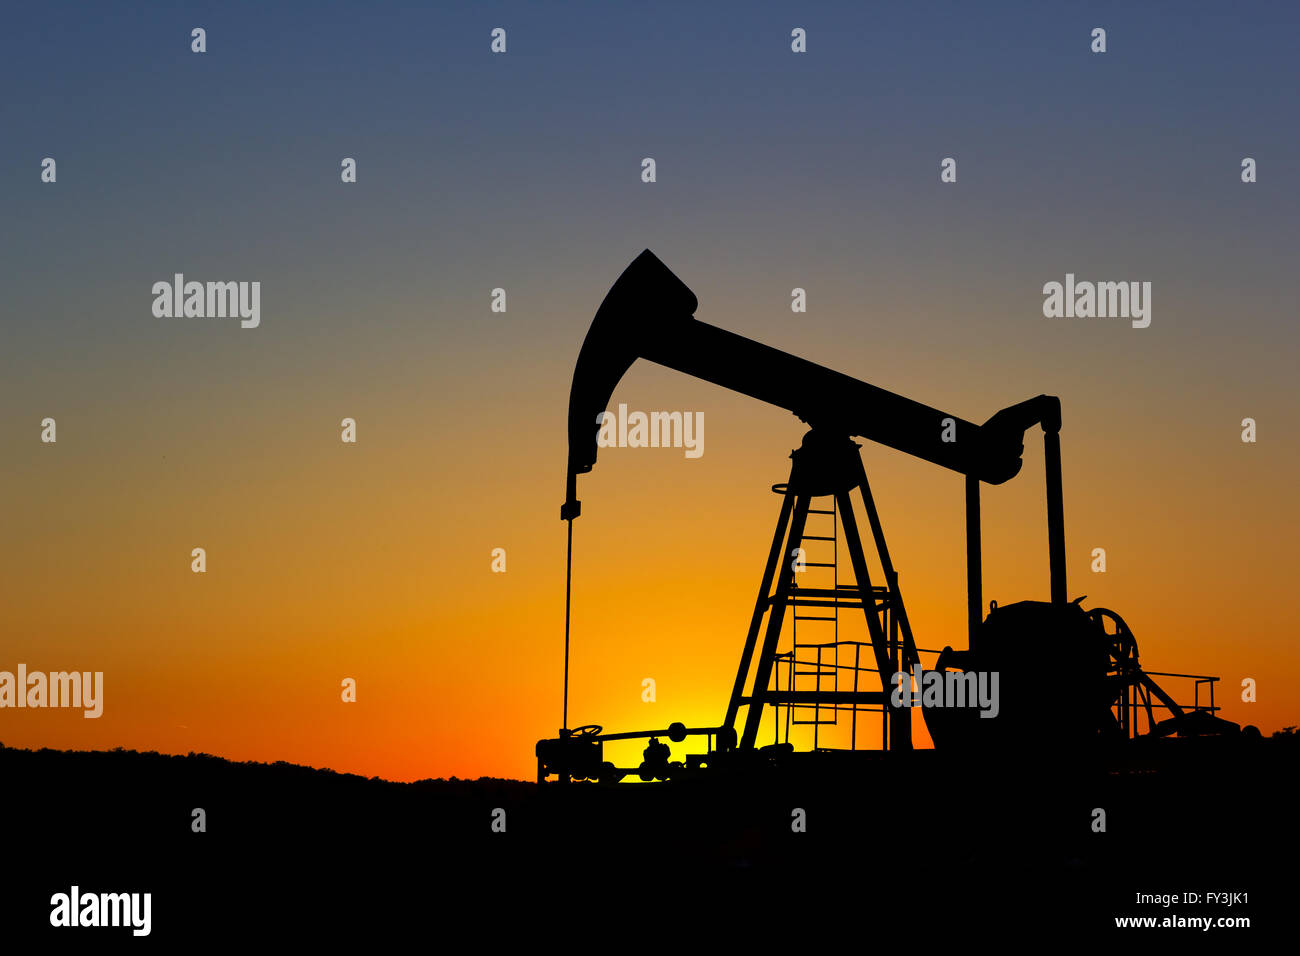 Öl Pumpe Silhouette über Sonnenuntergang Himmel Stockfoto